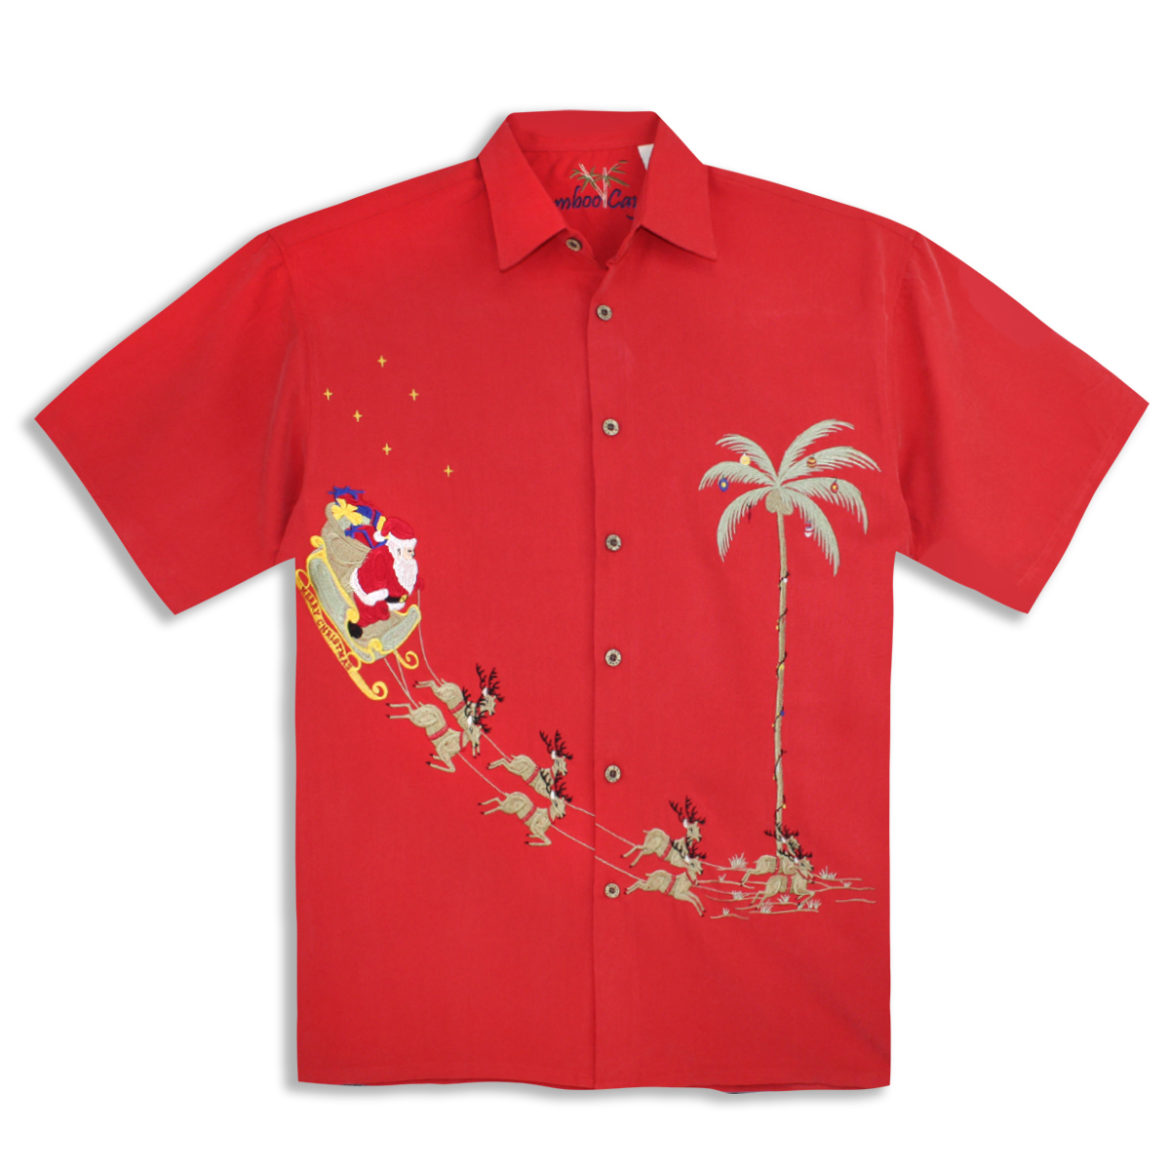 Bamboo Cay Men's Shirt - Santa's Landing - Tomato